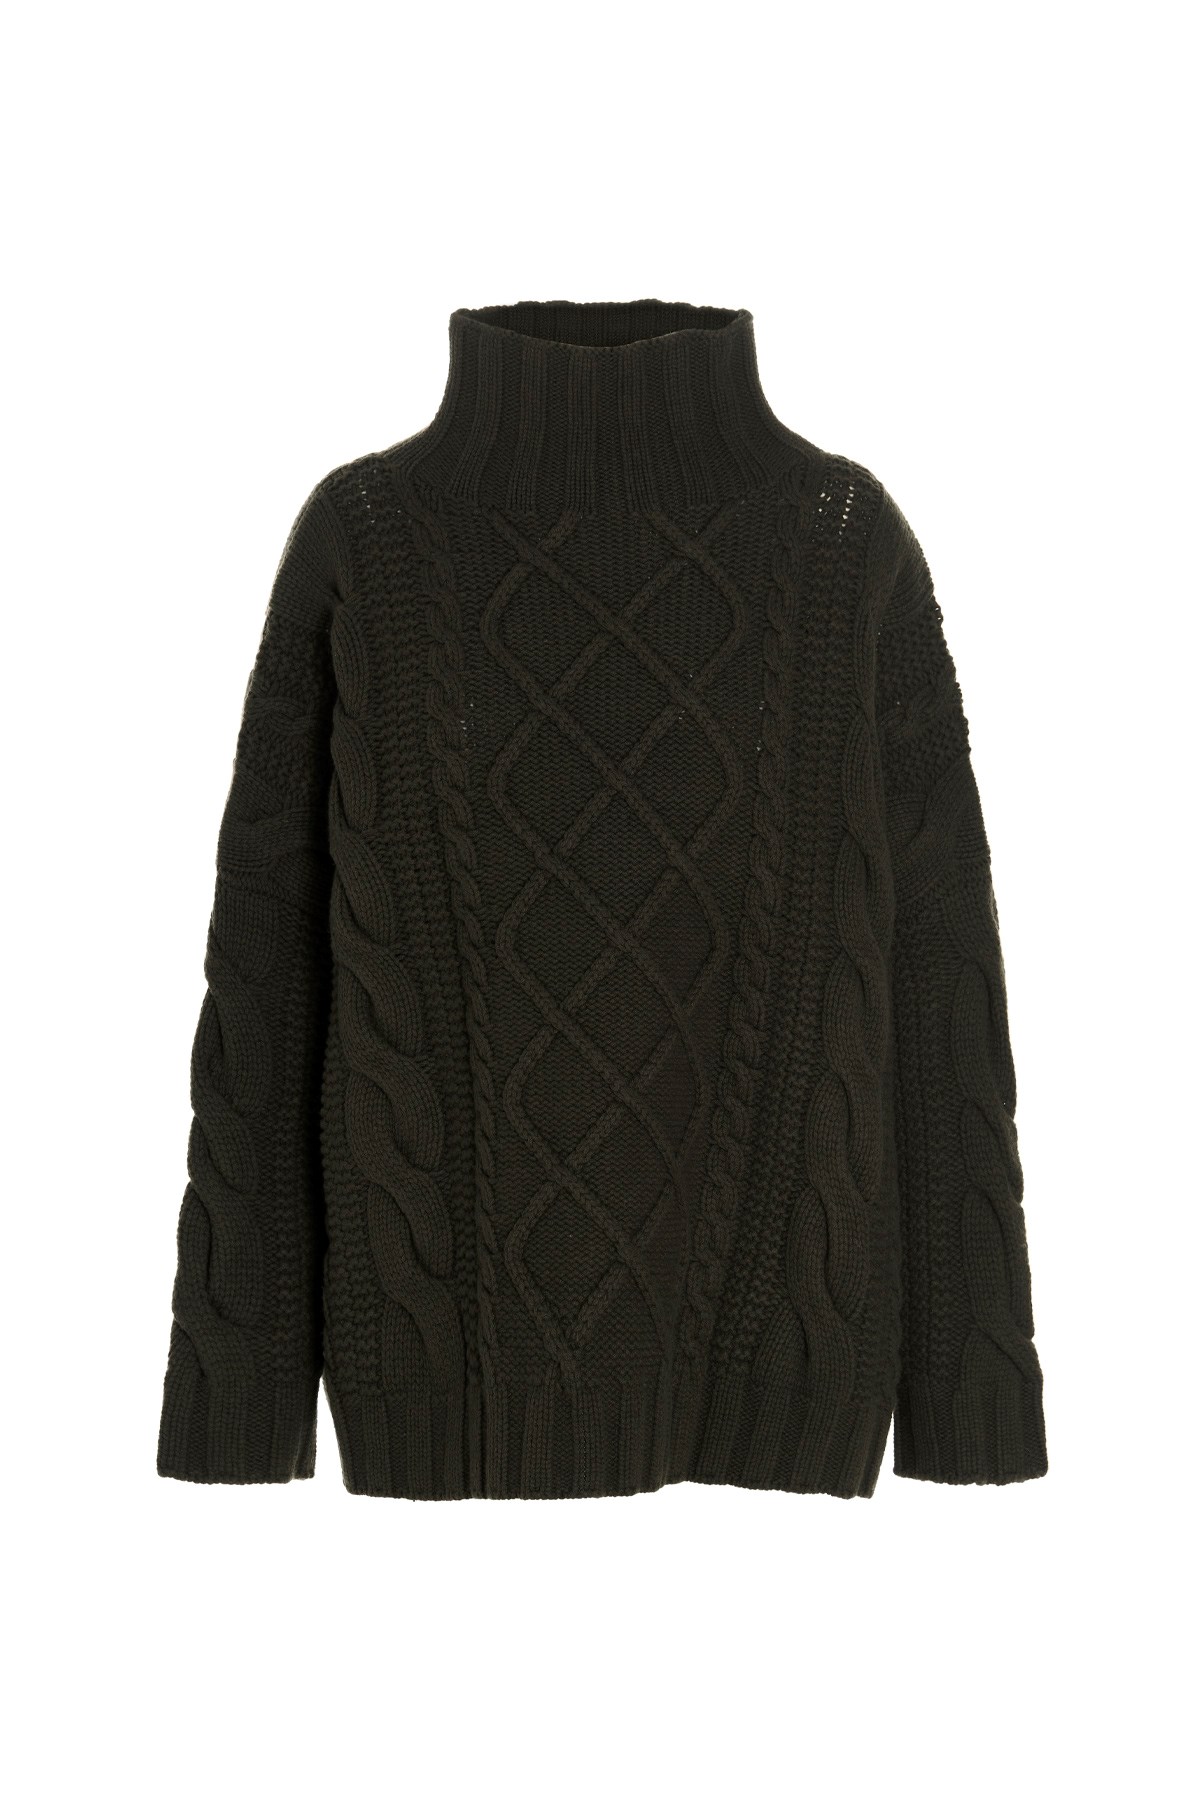 MAX MARA 'Gettata’ Sweater